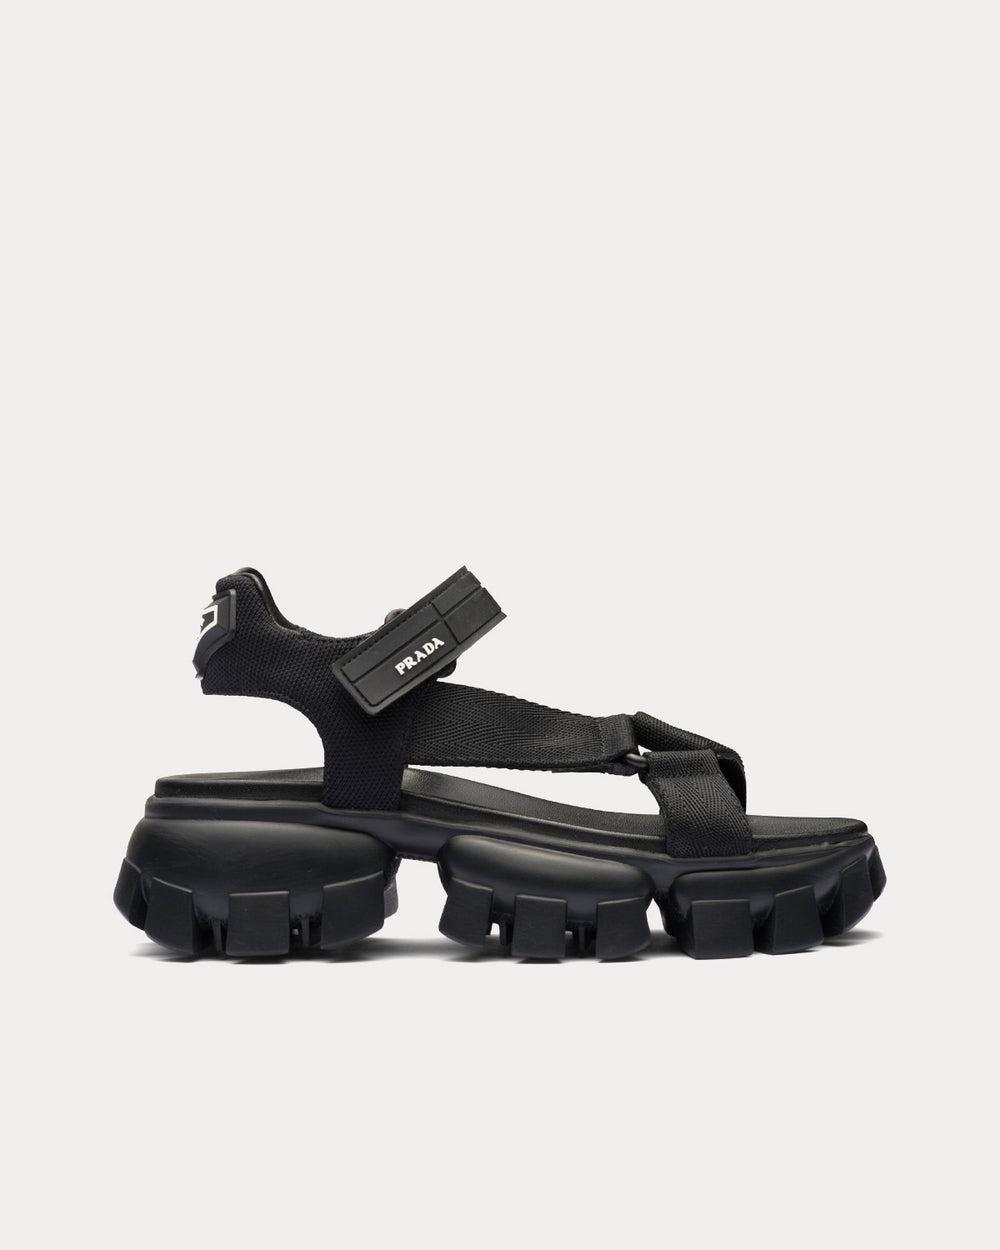 Prada Sporty Woven Nylon Tape Black Sandals - Sneak in Peace